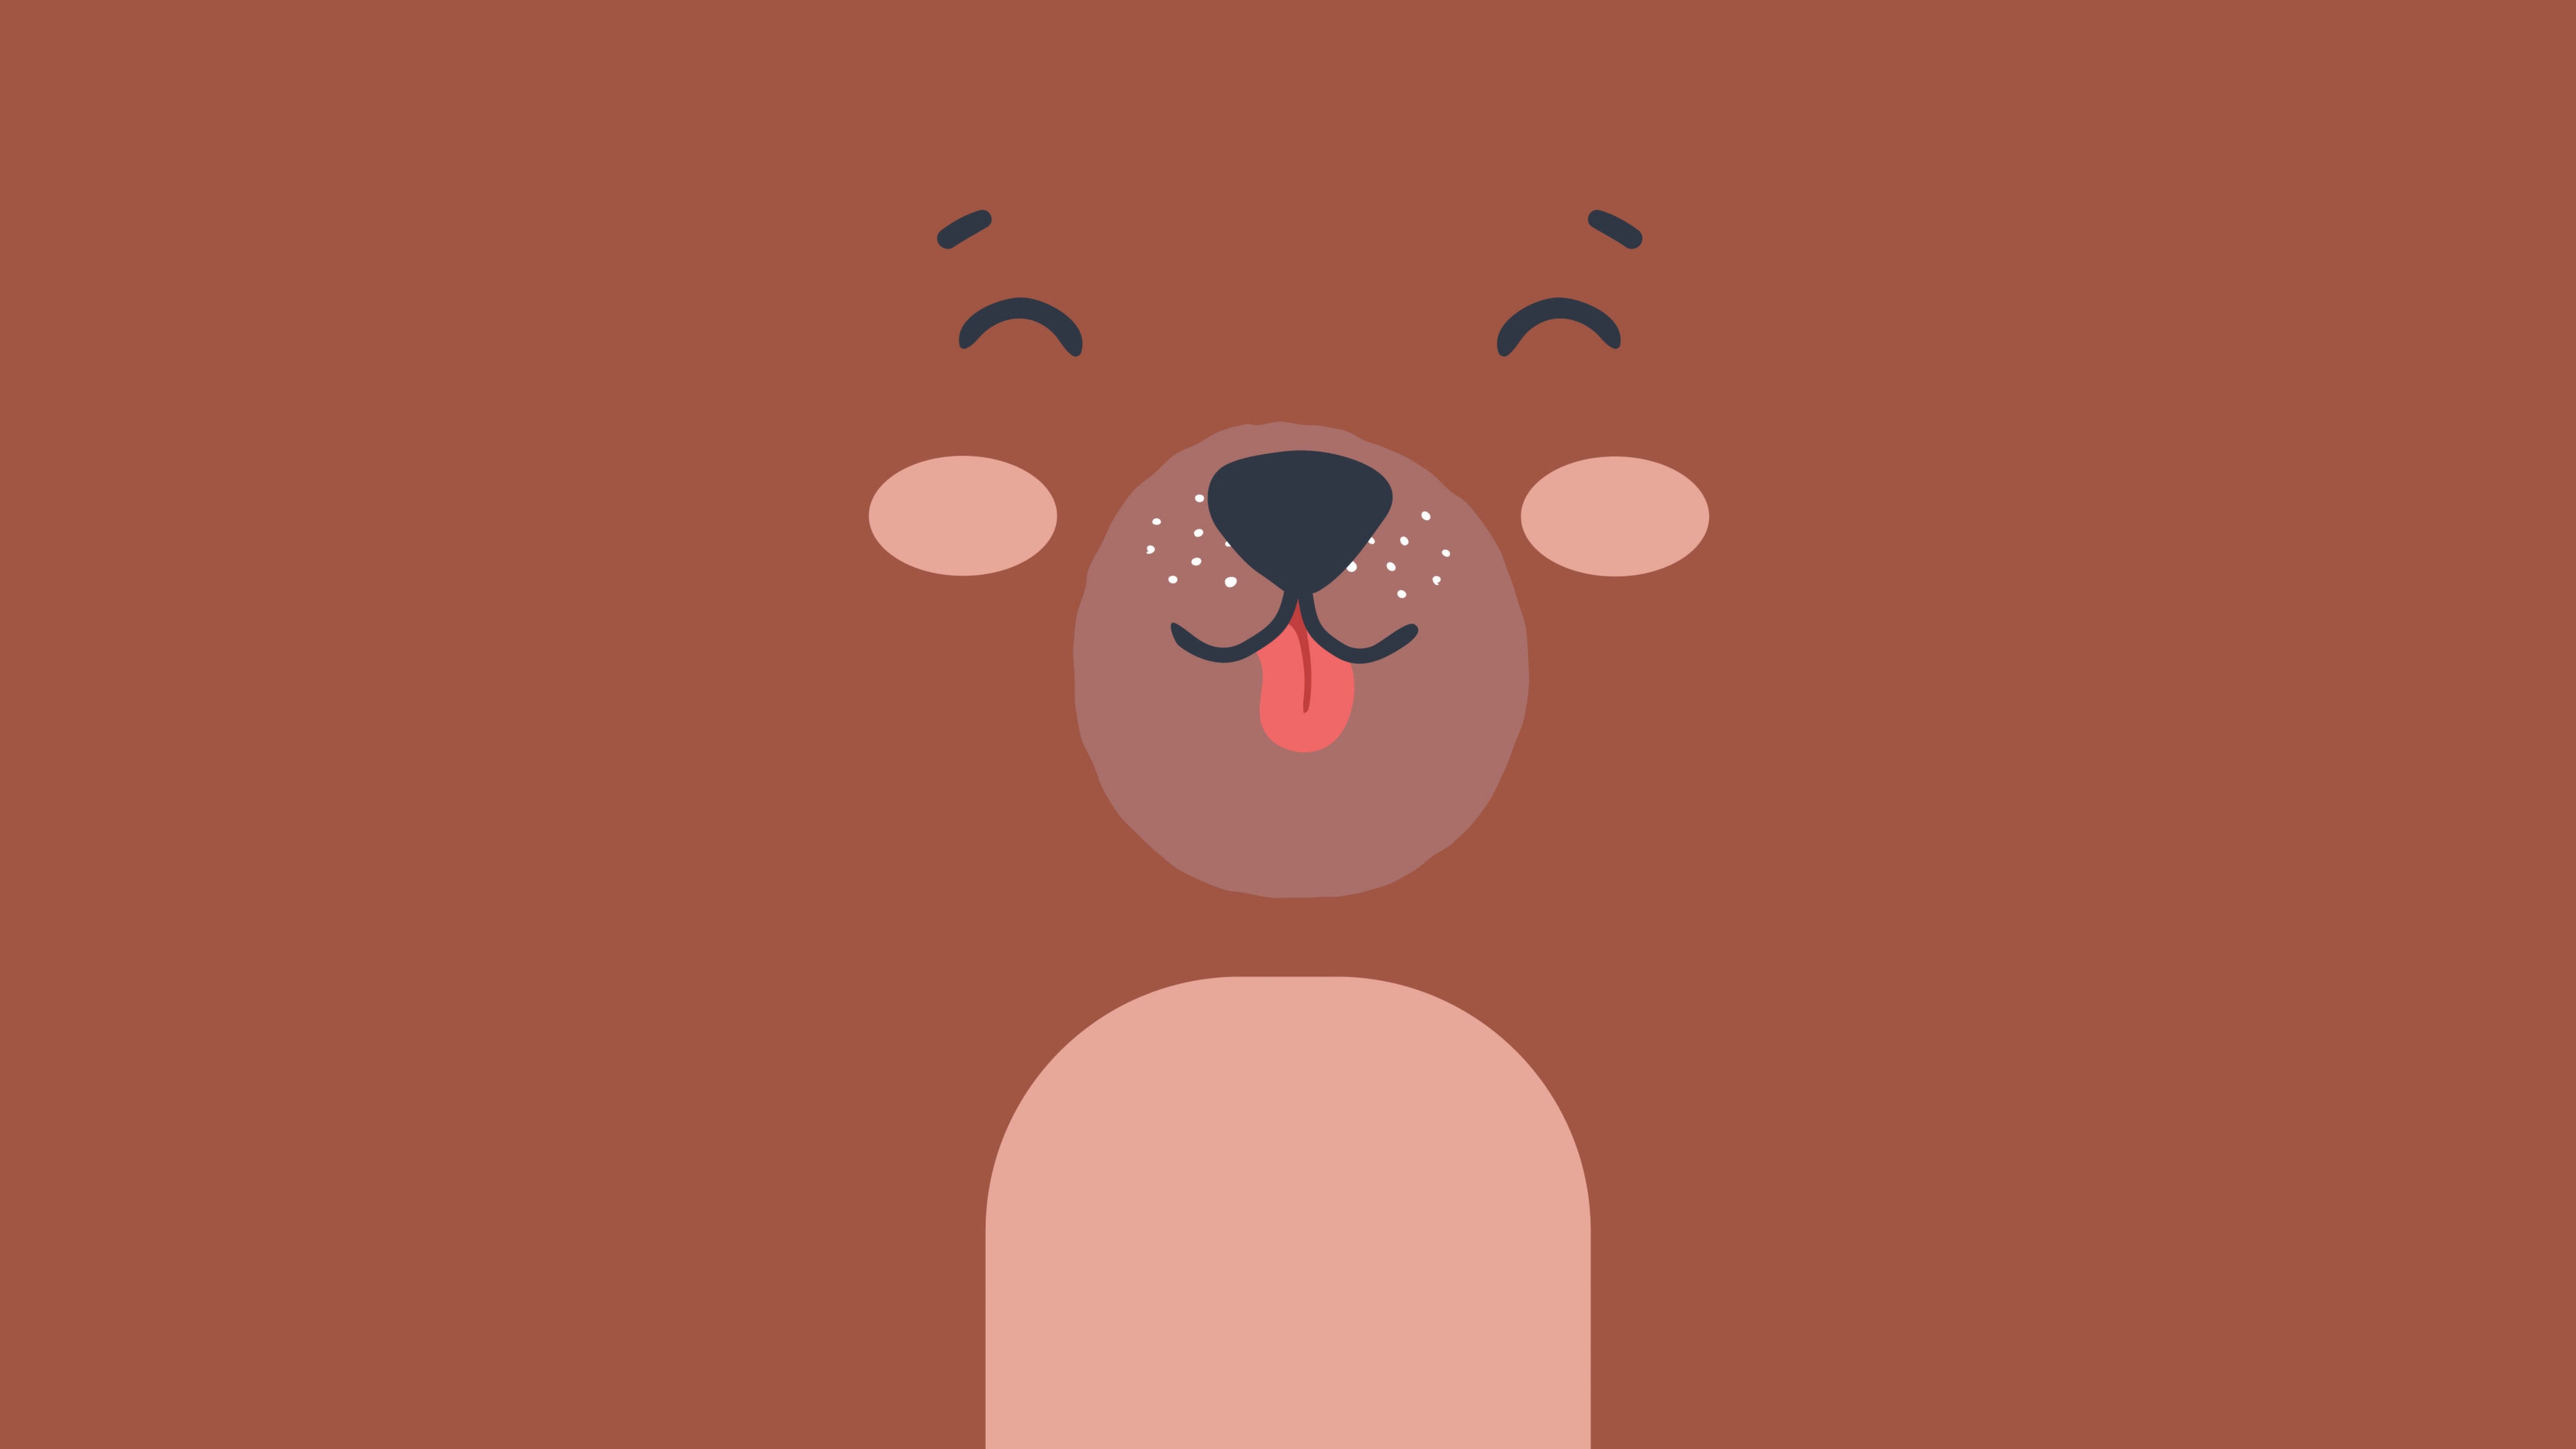 HD wallpaper, Brown Background, Brown Aesthetic, Cute Costume, Cartoon, Kawaii Bear, Minimalist, 5K, Cute Bear, Smiley Bear